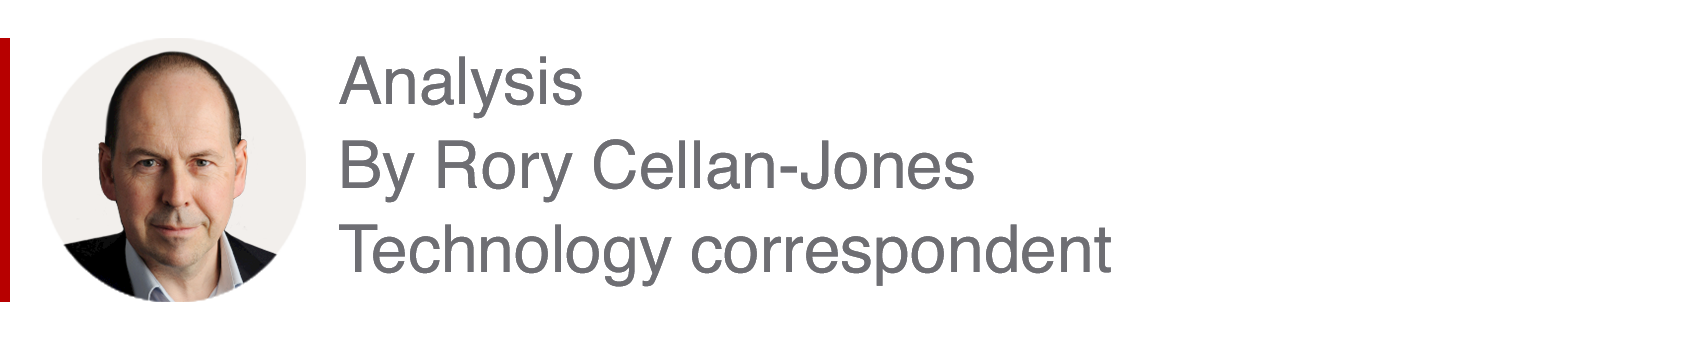 Analysis box by Rory Cellan-Jones, technology correspondent